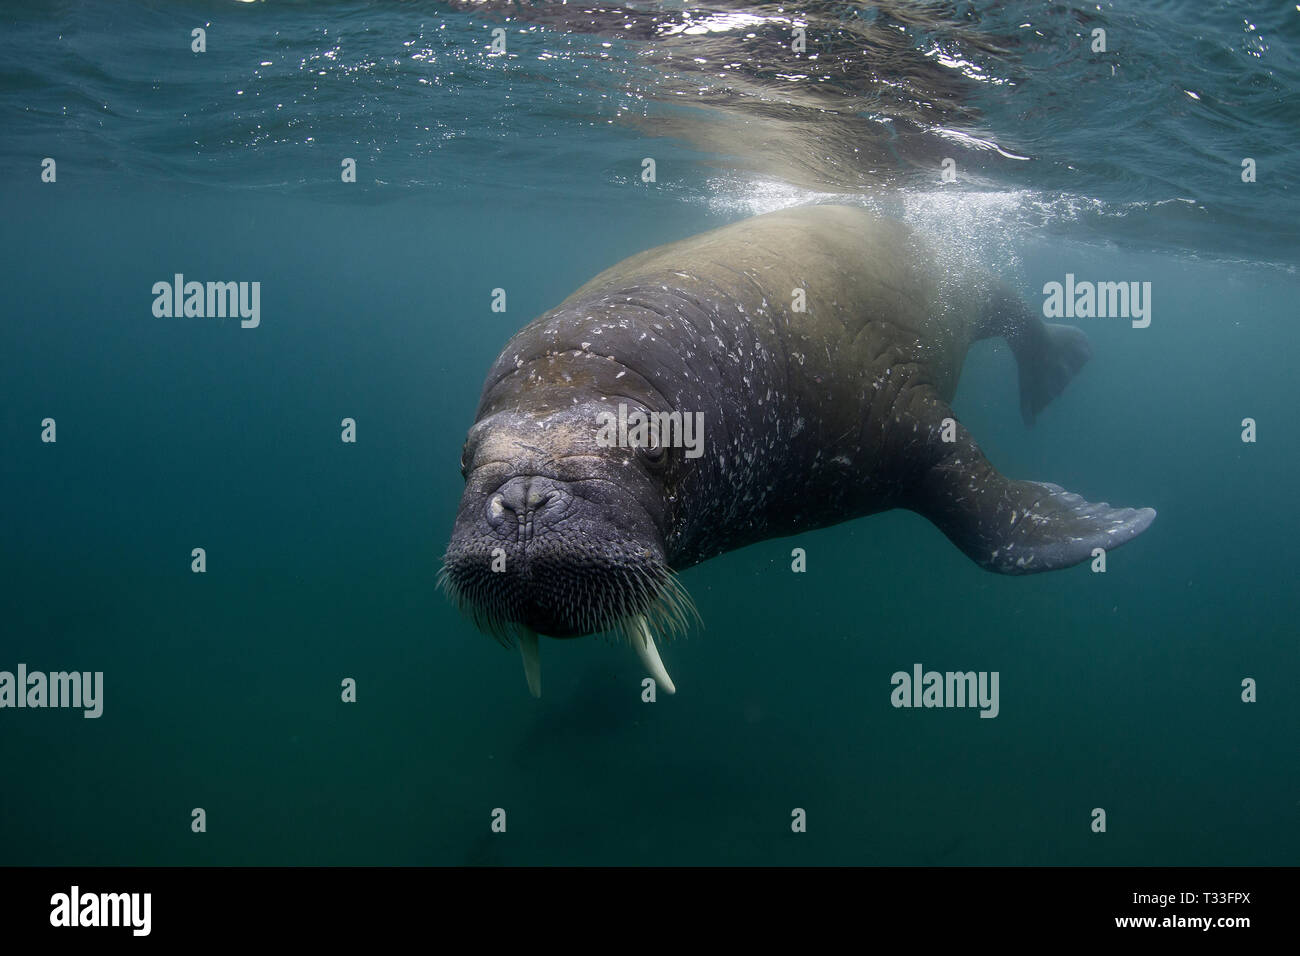 Atlantic Walrus, Odobenus rosmarus, Spitsbergen, Arctic Ocean, Norway Stock Photo